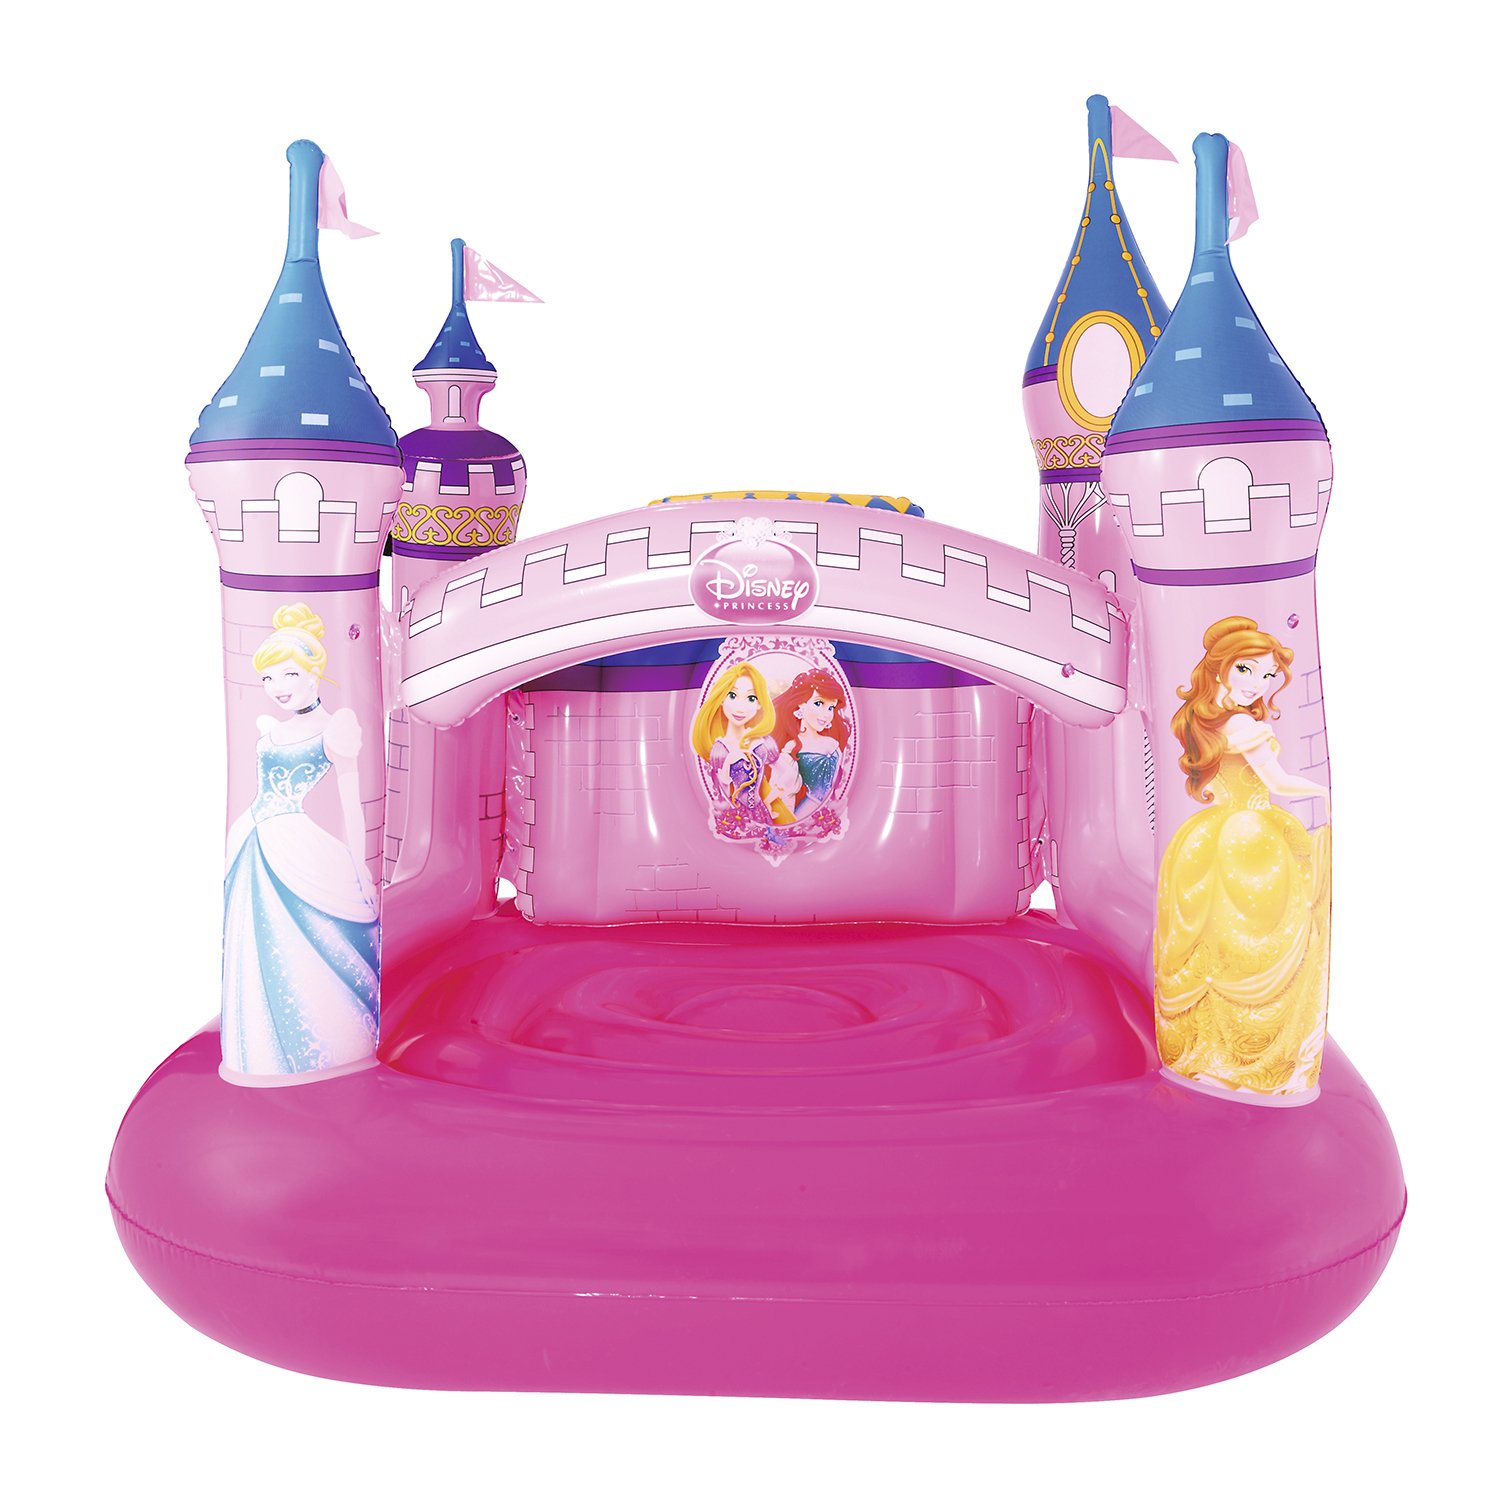 Надувной батут Замок из серии Disney Princess, размер 157 х 147 х 163 см., до 85 кг.  